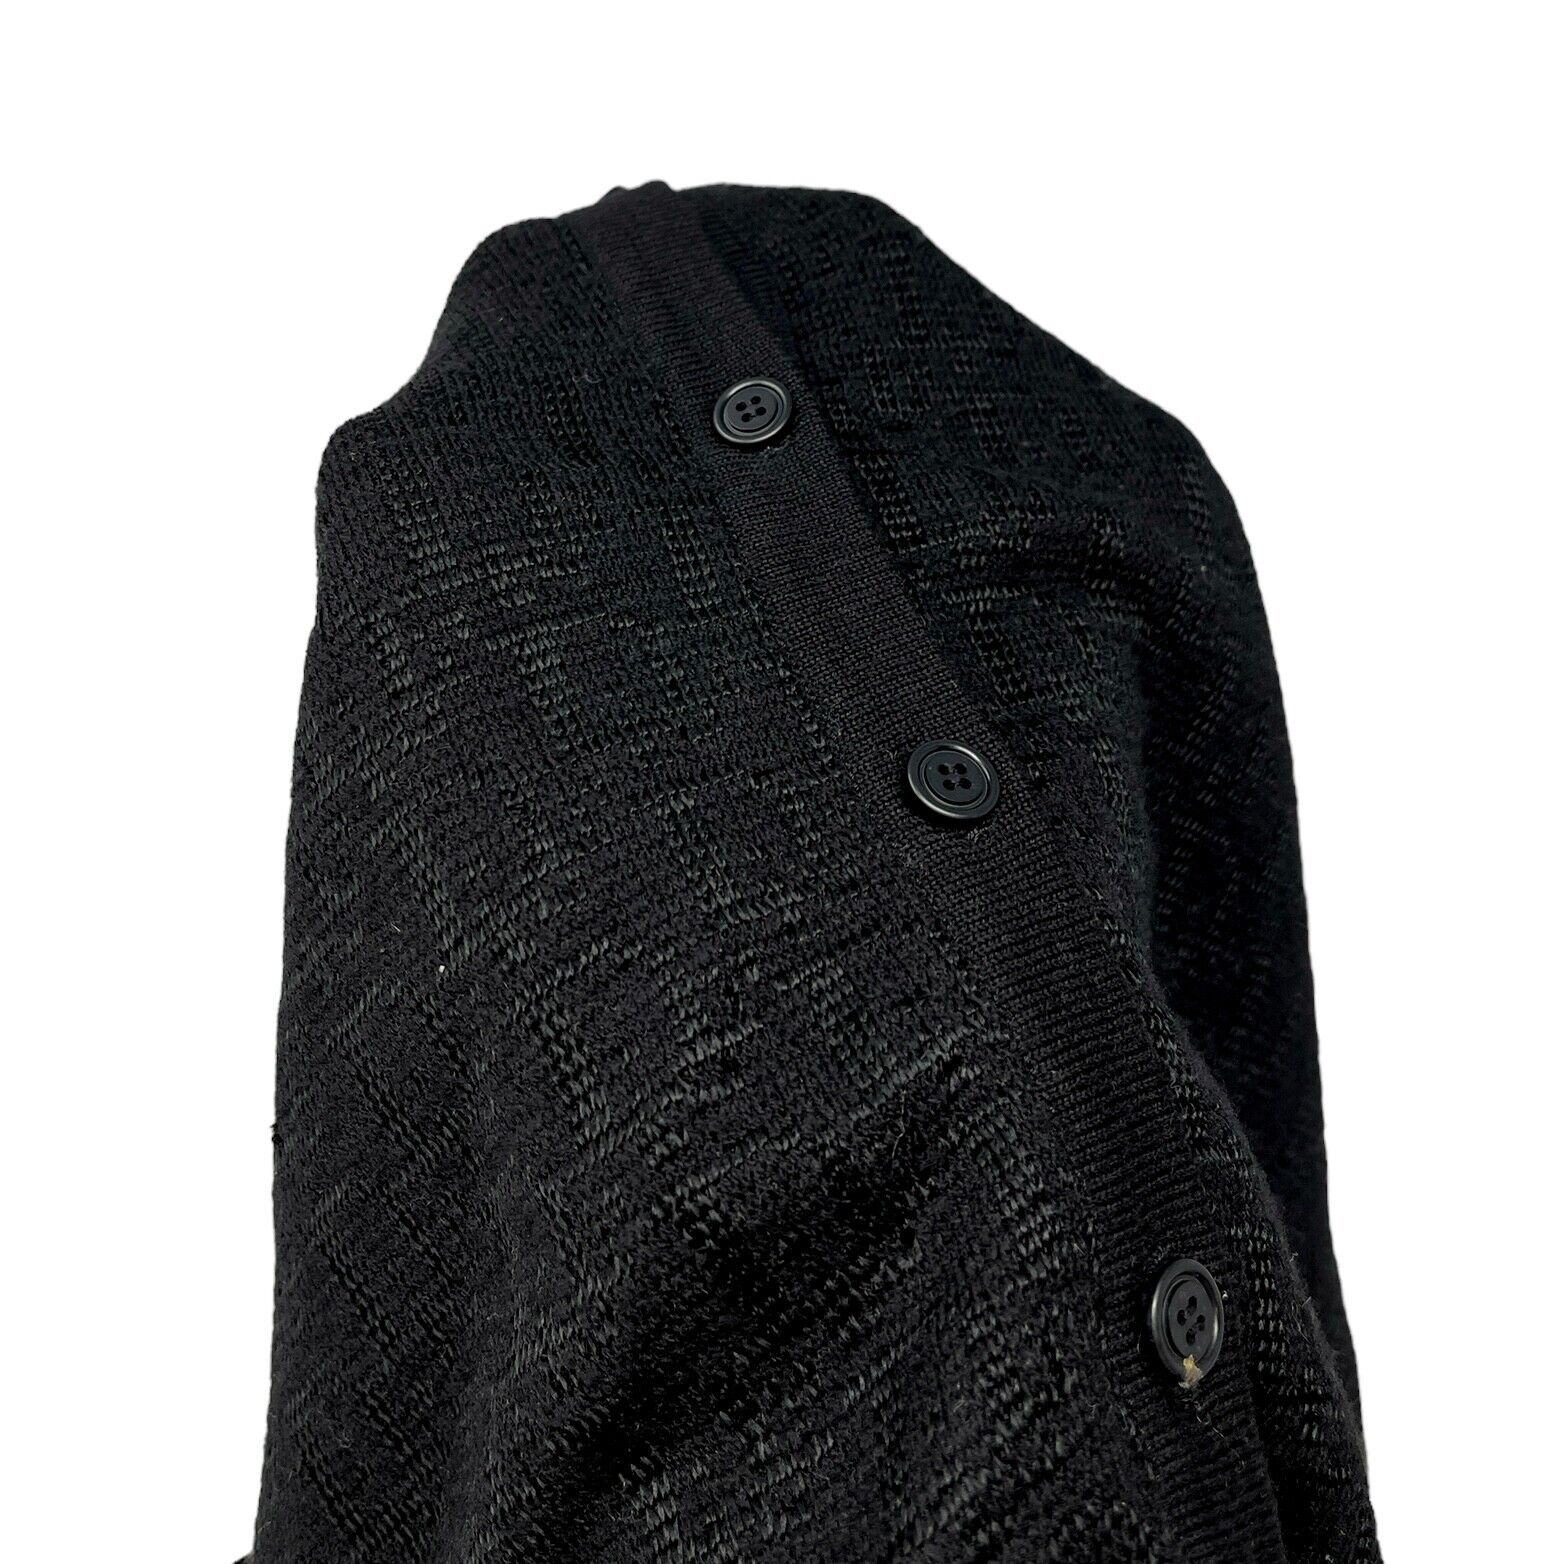 Christian Dior Vintage Trotter Monogram Knit Vest #M Button Black Wool Rank AB+